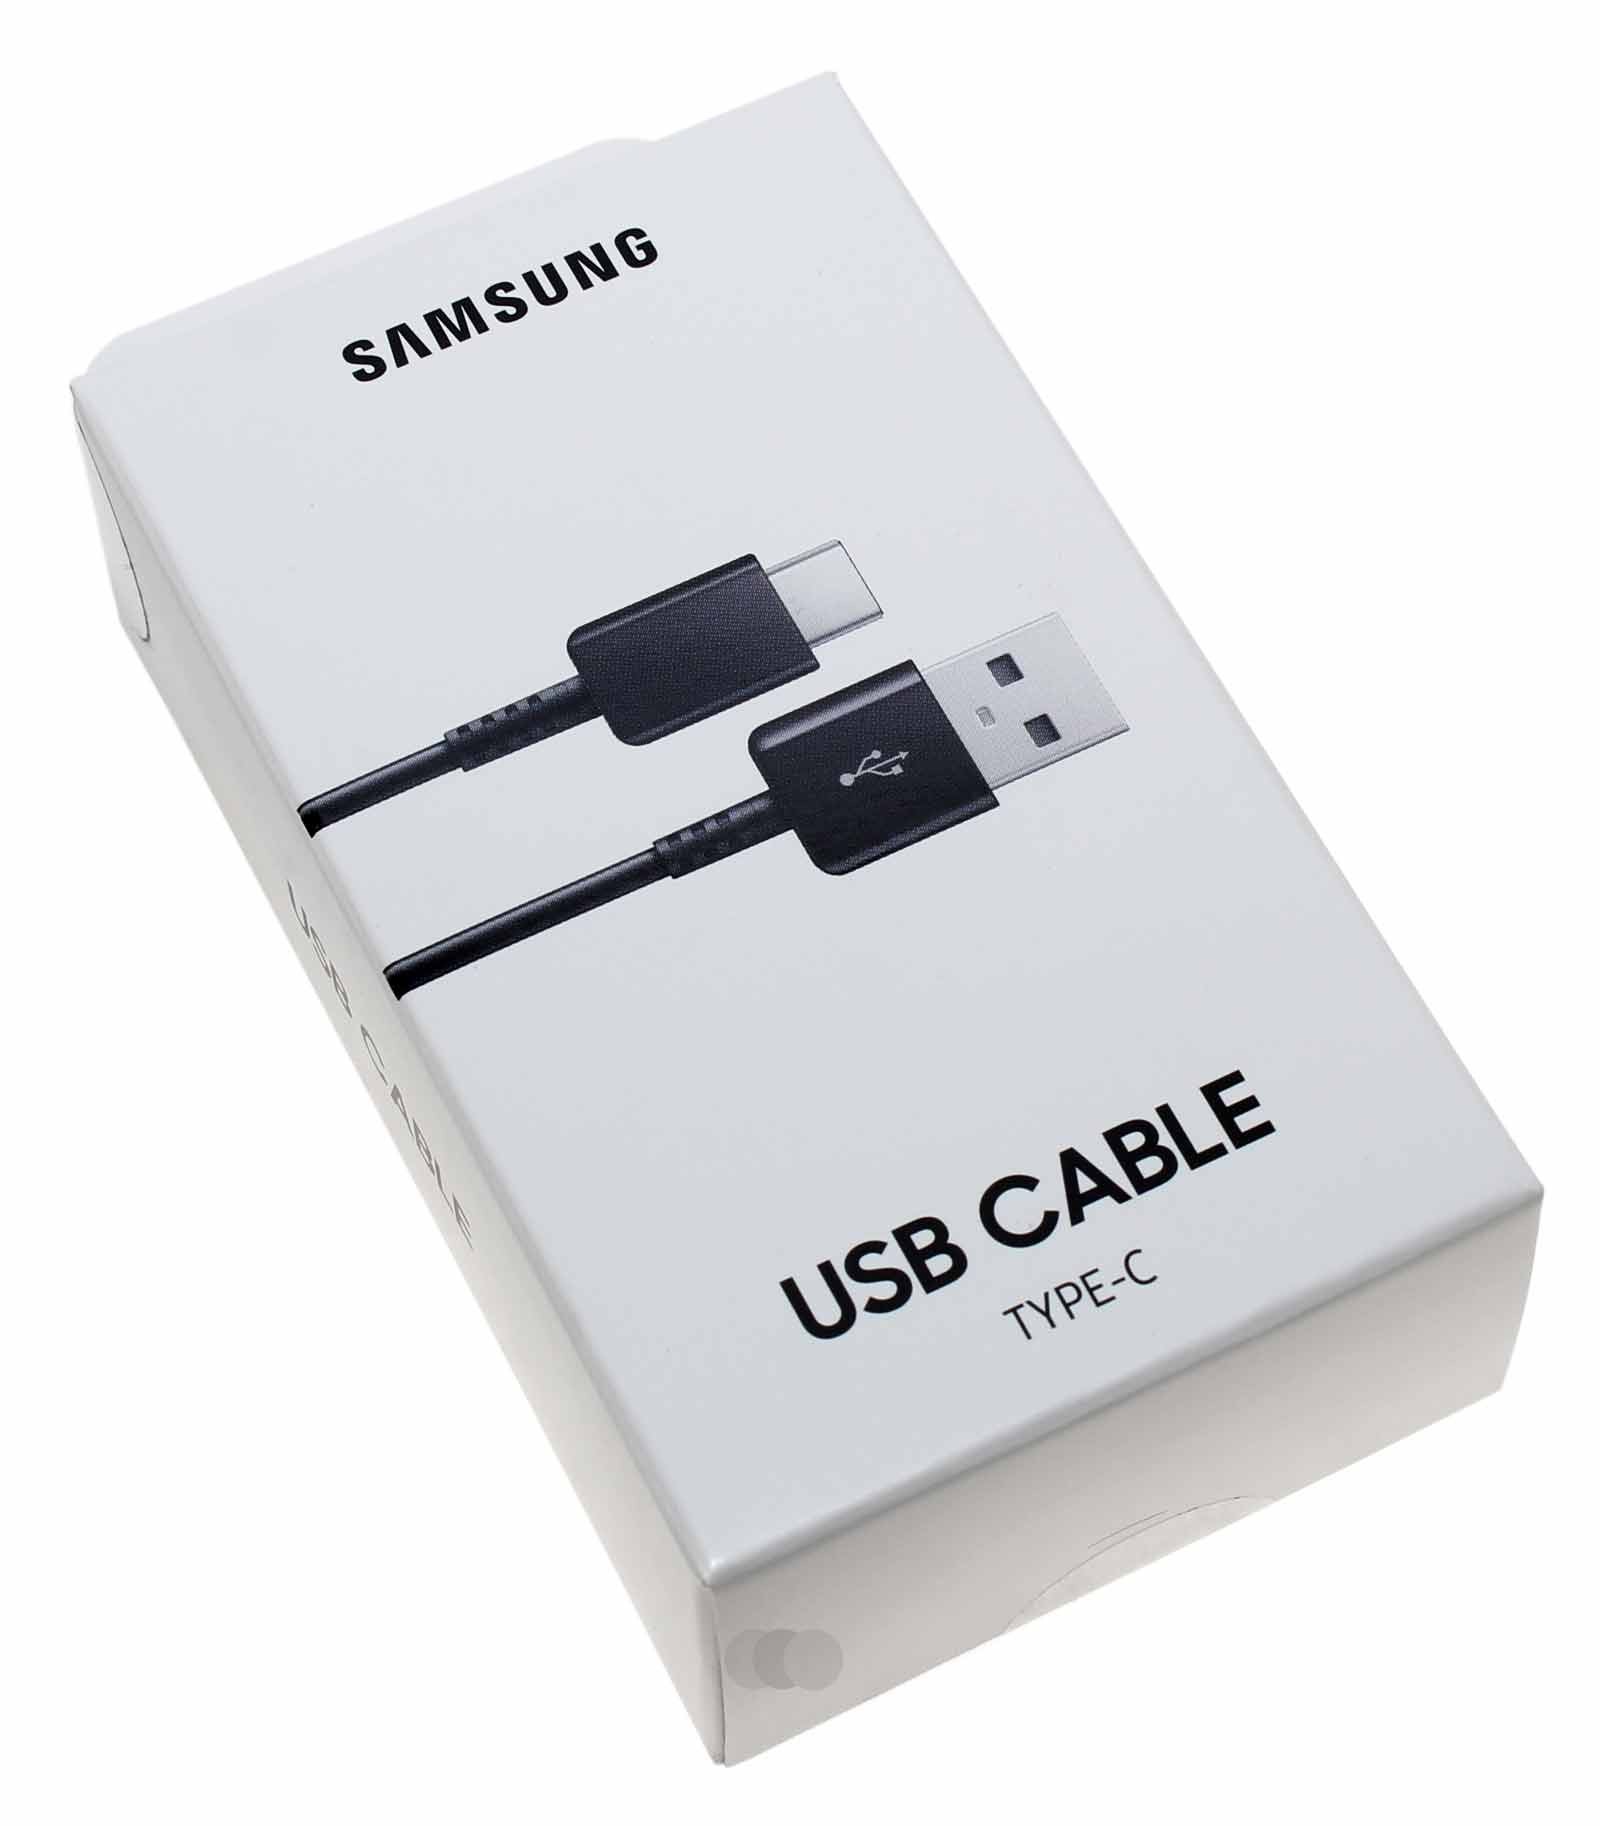 SAMSUNG ORIGINAL USB-A TILL USB-C laddningskabel Vit